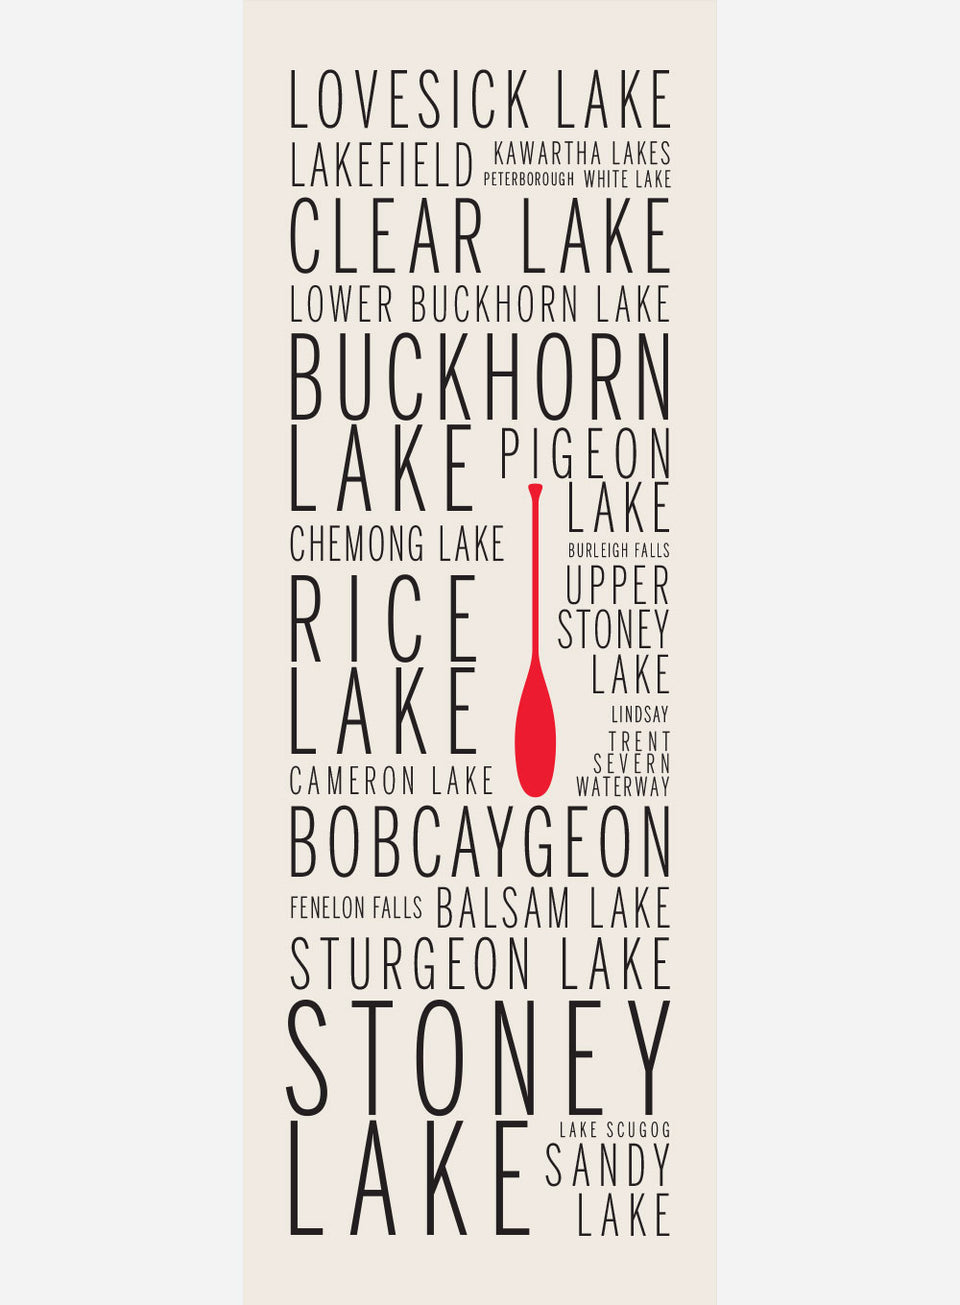 Kawartha Lakes Cottage Country Names